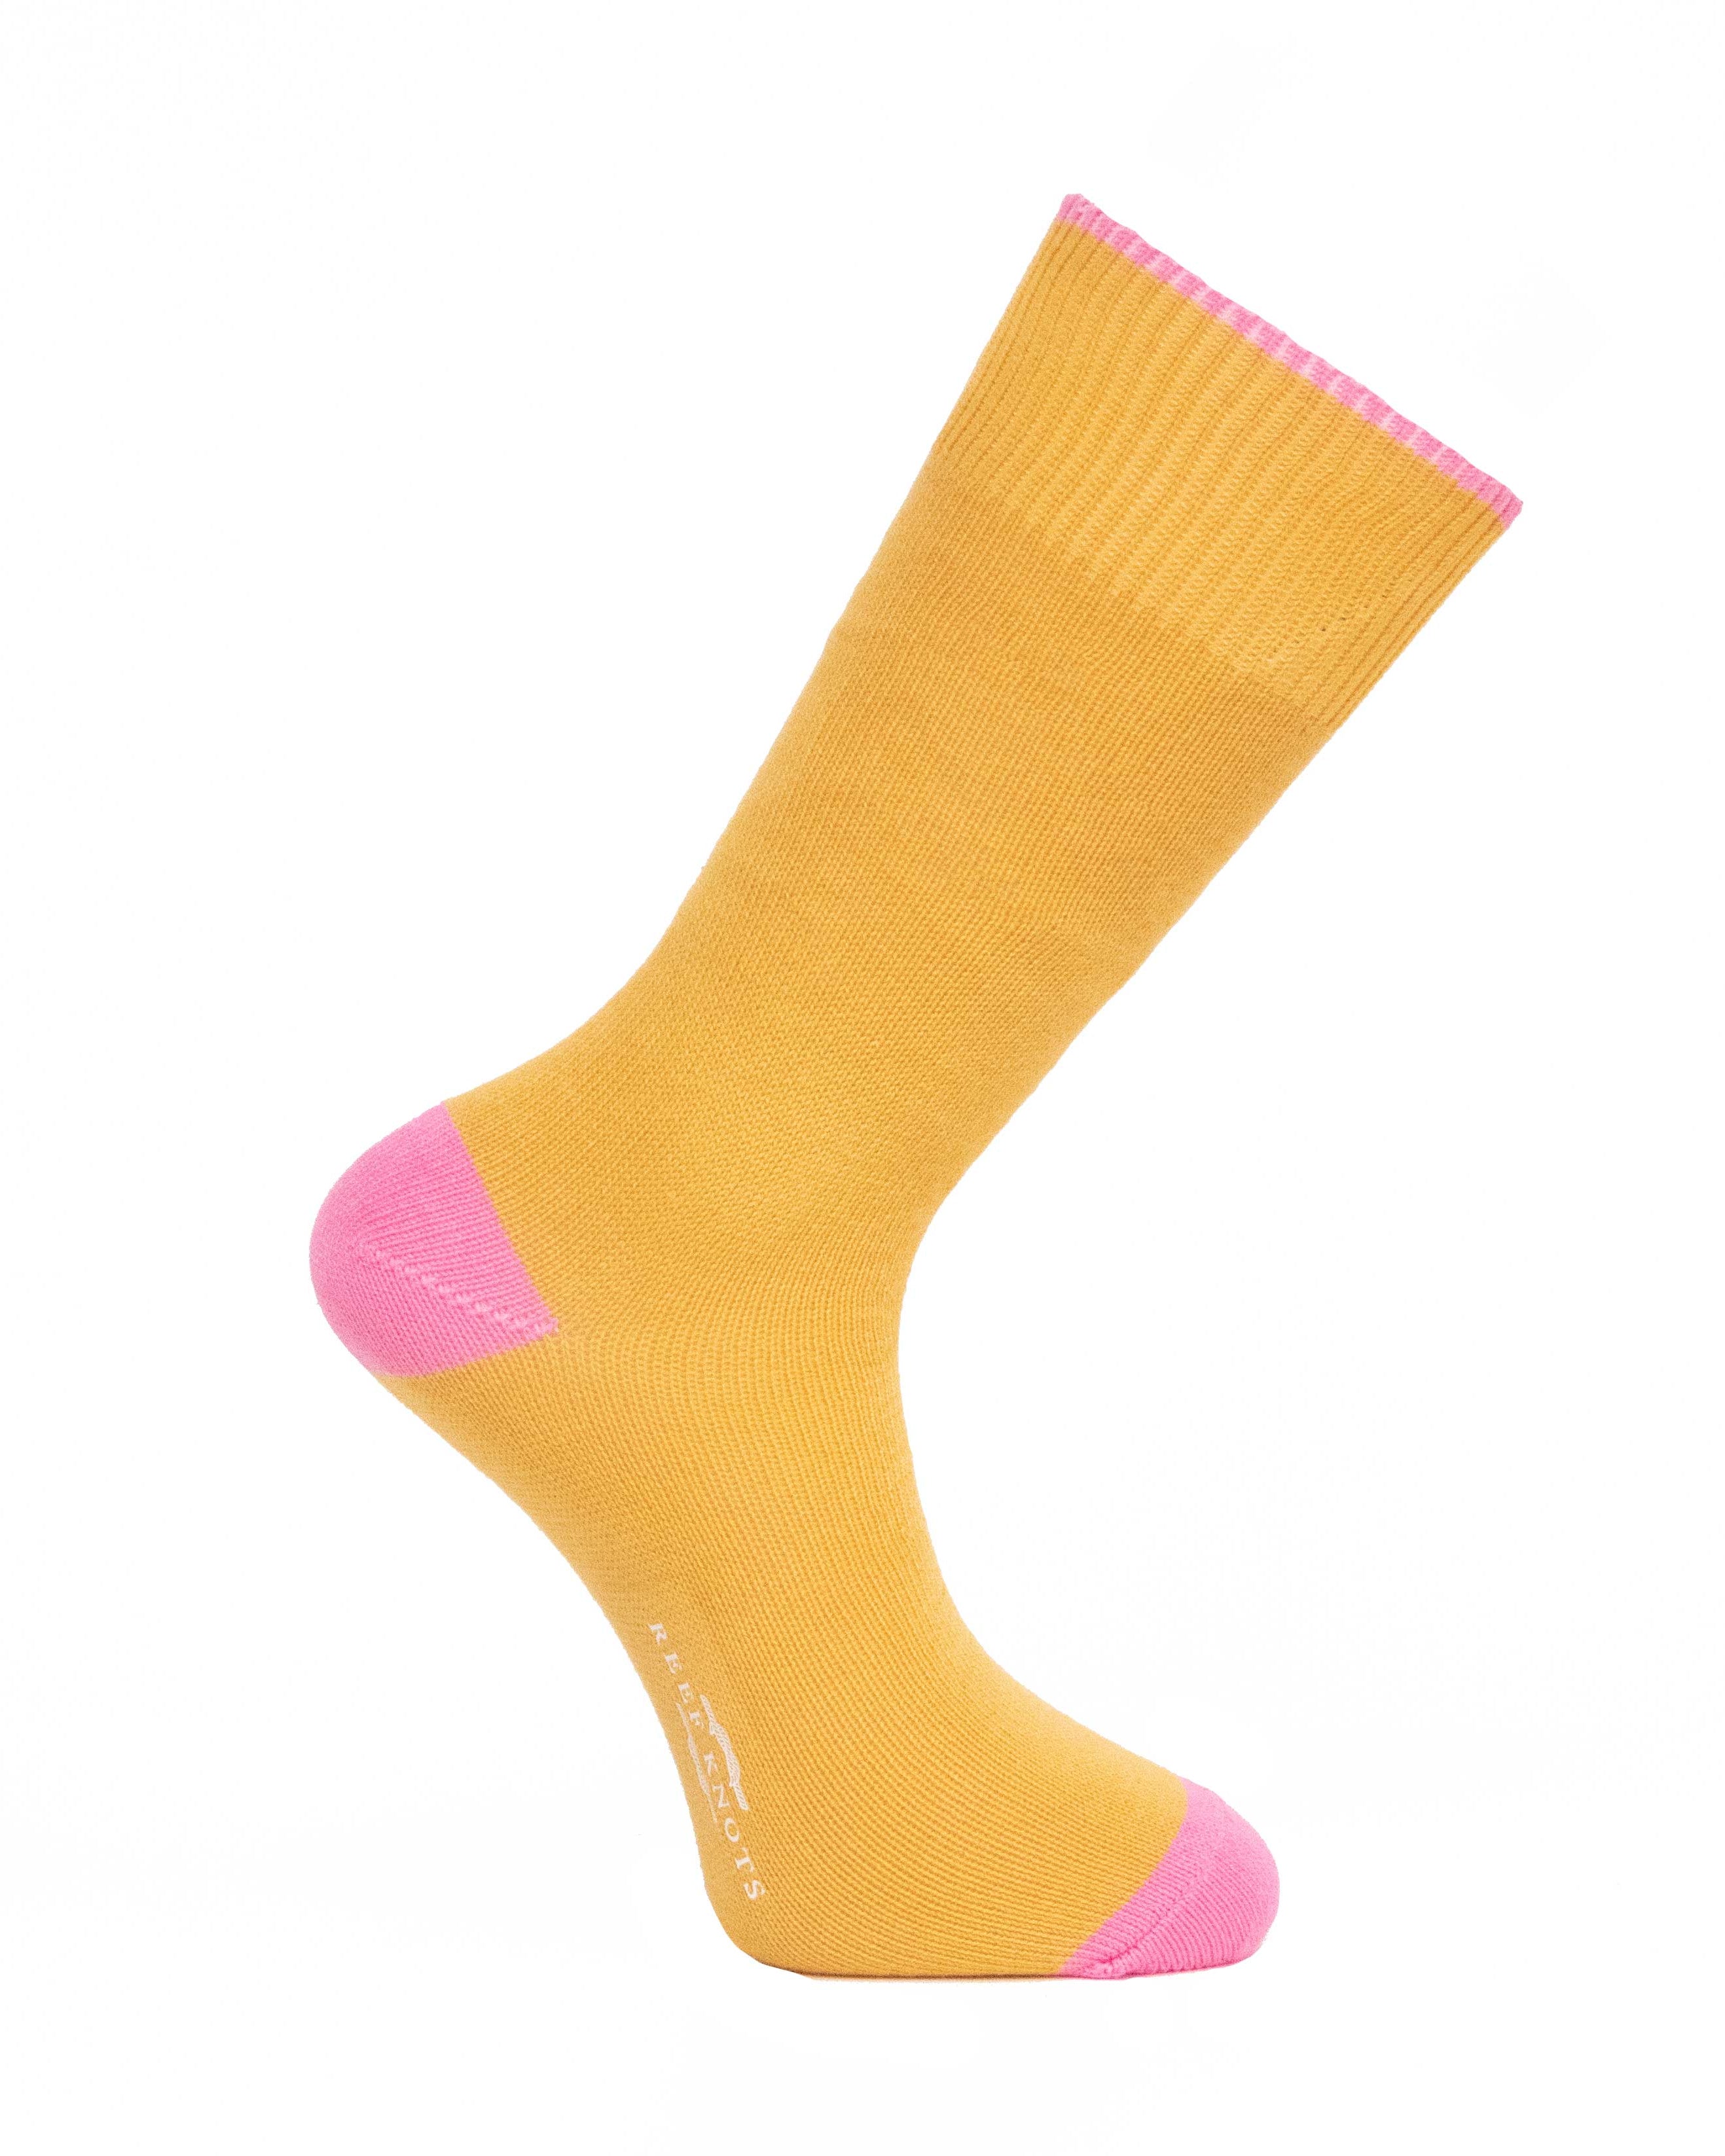 Socks | Colourful Socks | Striped Socks | Made in England – ReefKnots